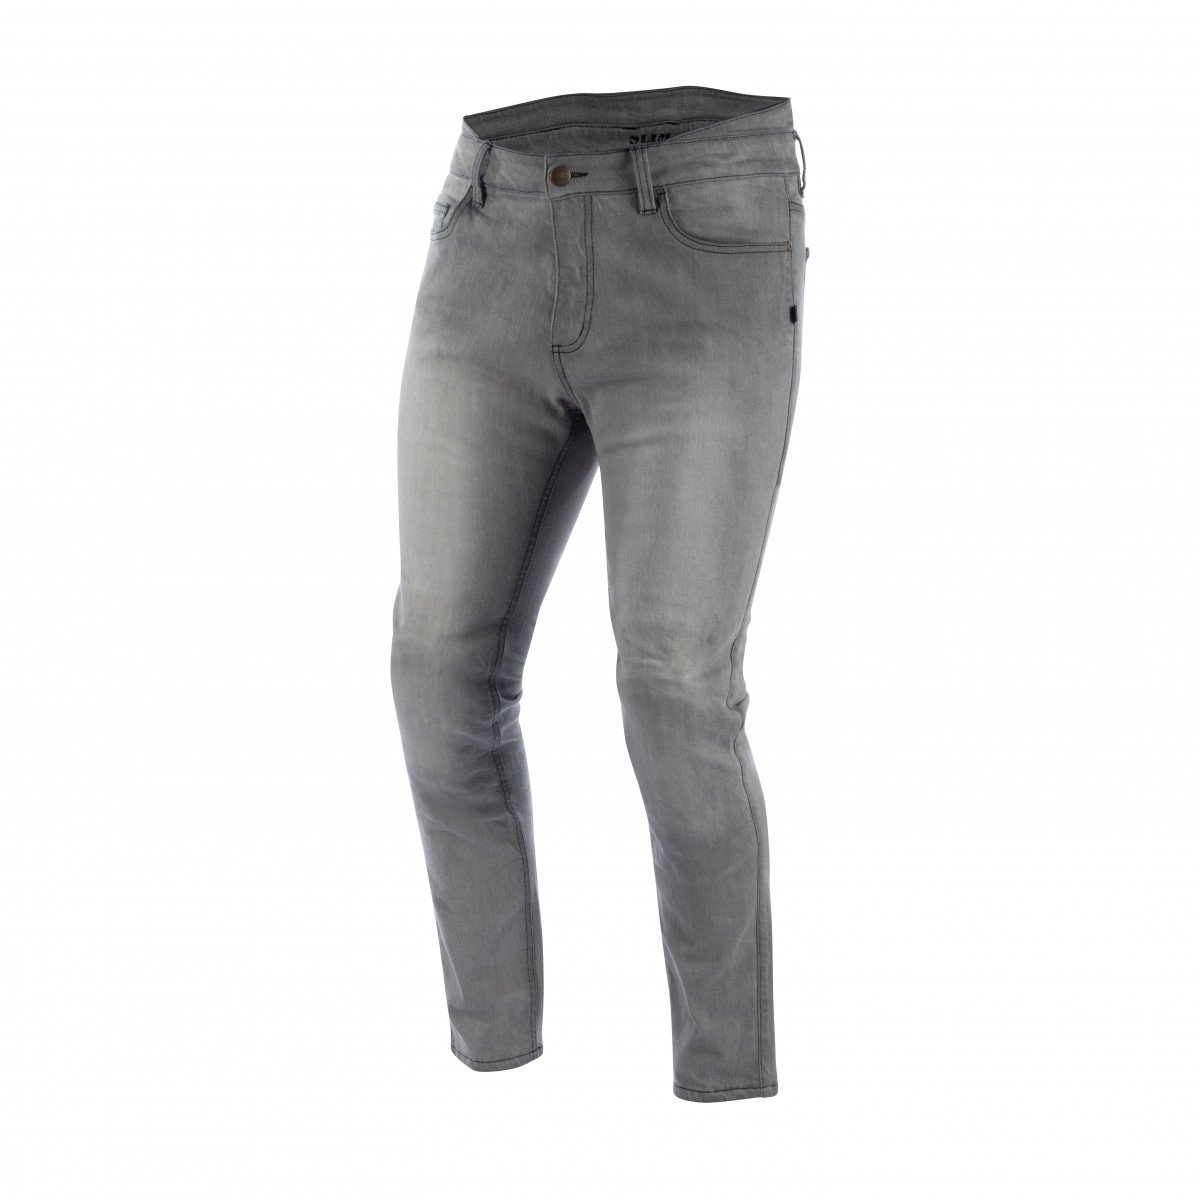 Image of Bering Trousers Twinner Grey Size XL ID 3660815168370